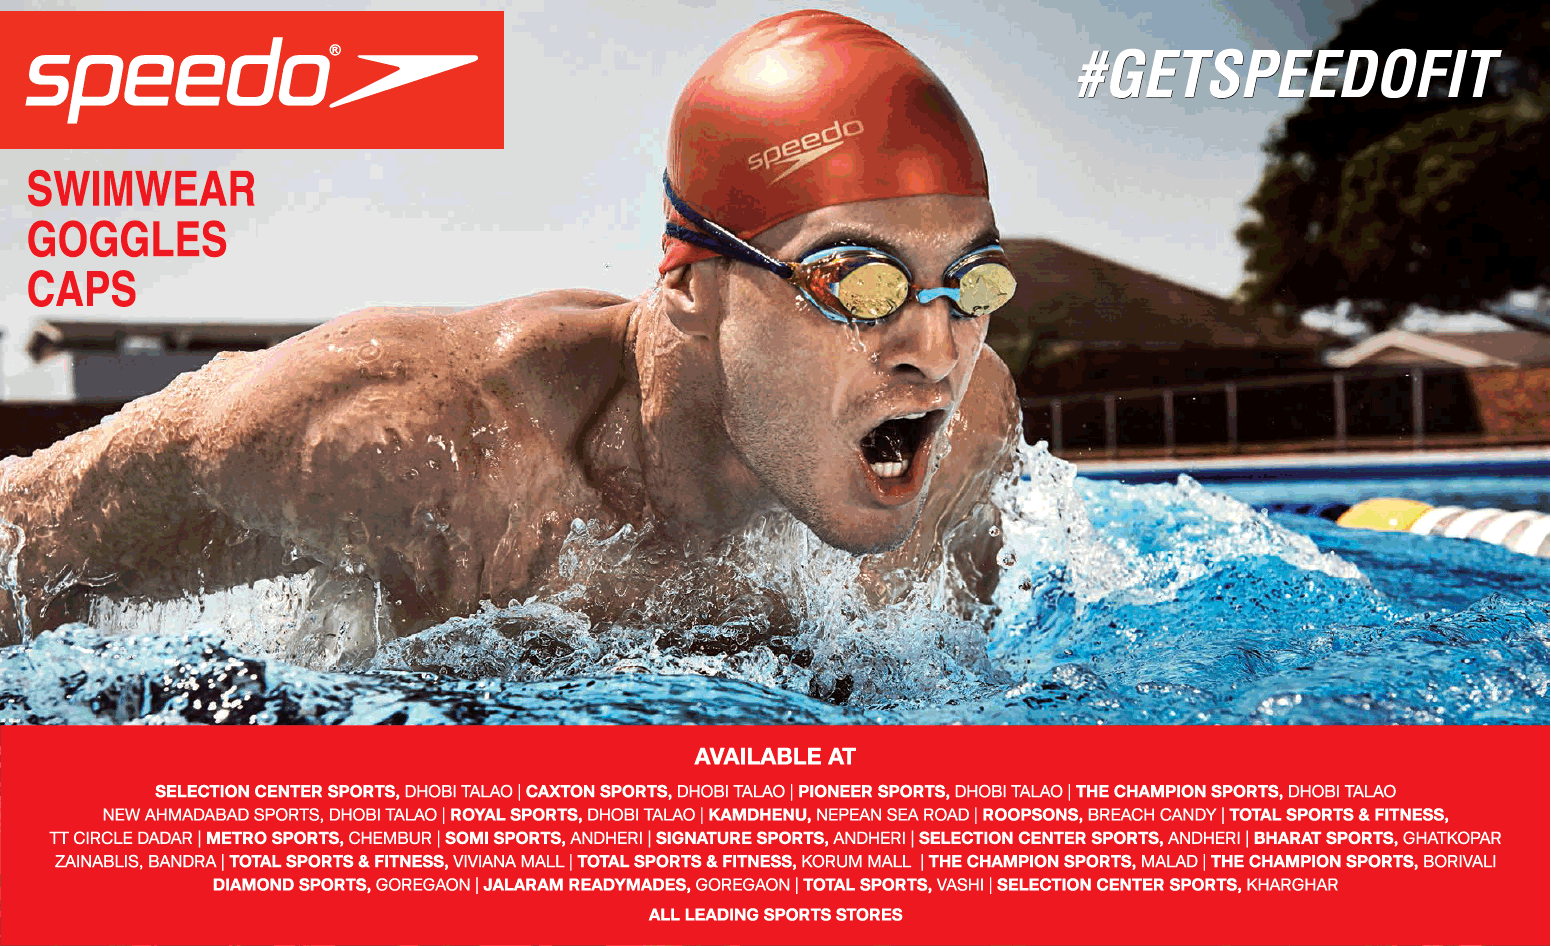 Speedo Swimmer Goggles Caps Ad Advert Gallery